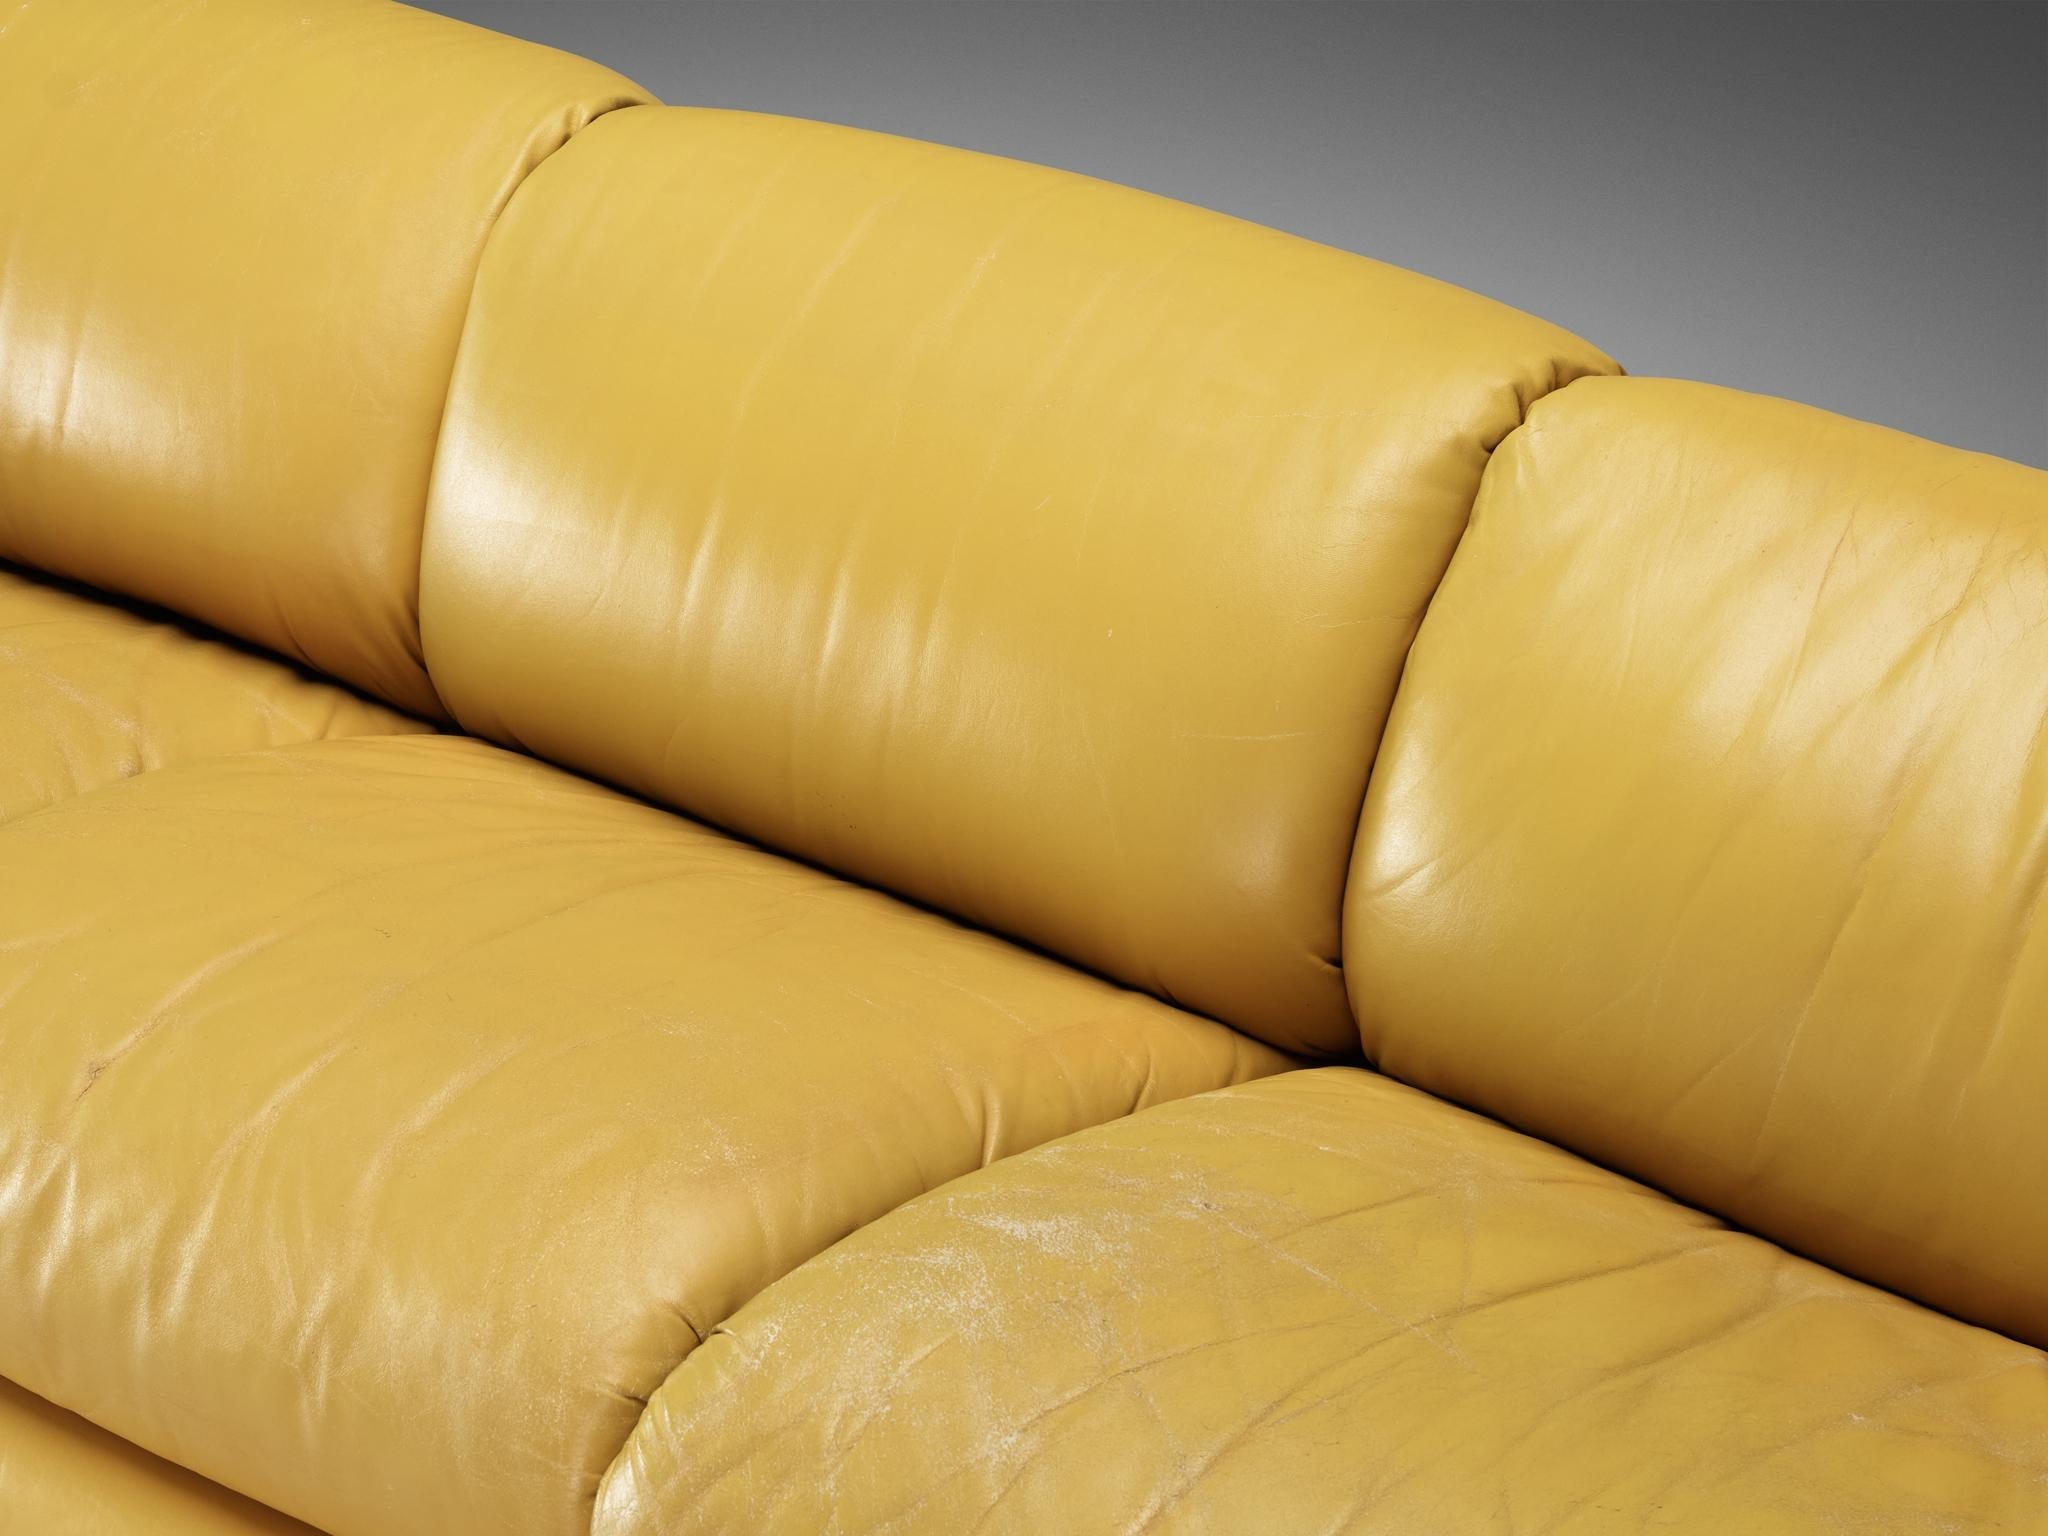 Three Seat Voluptuous Sofa in Yellow Leather